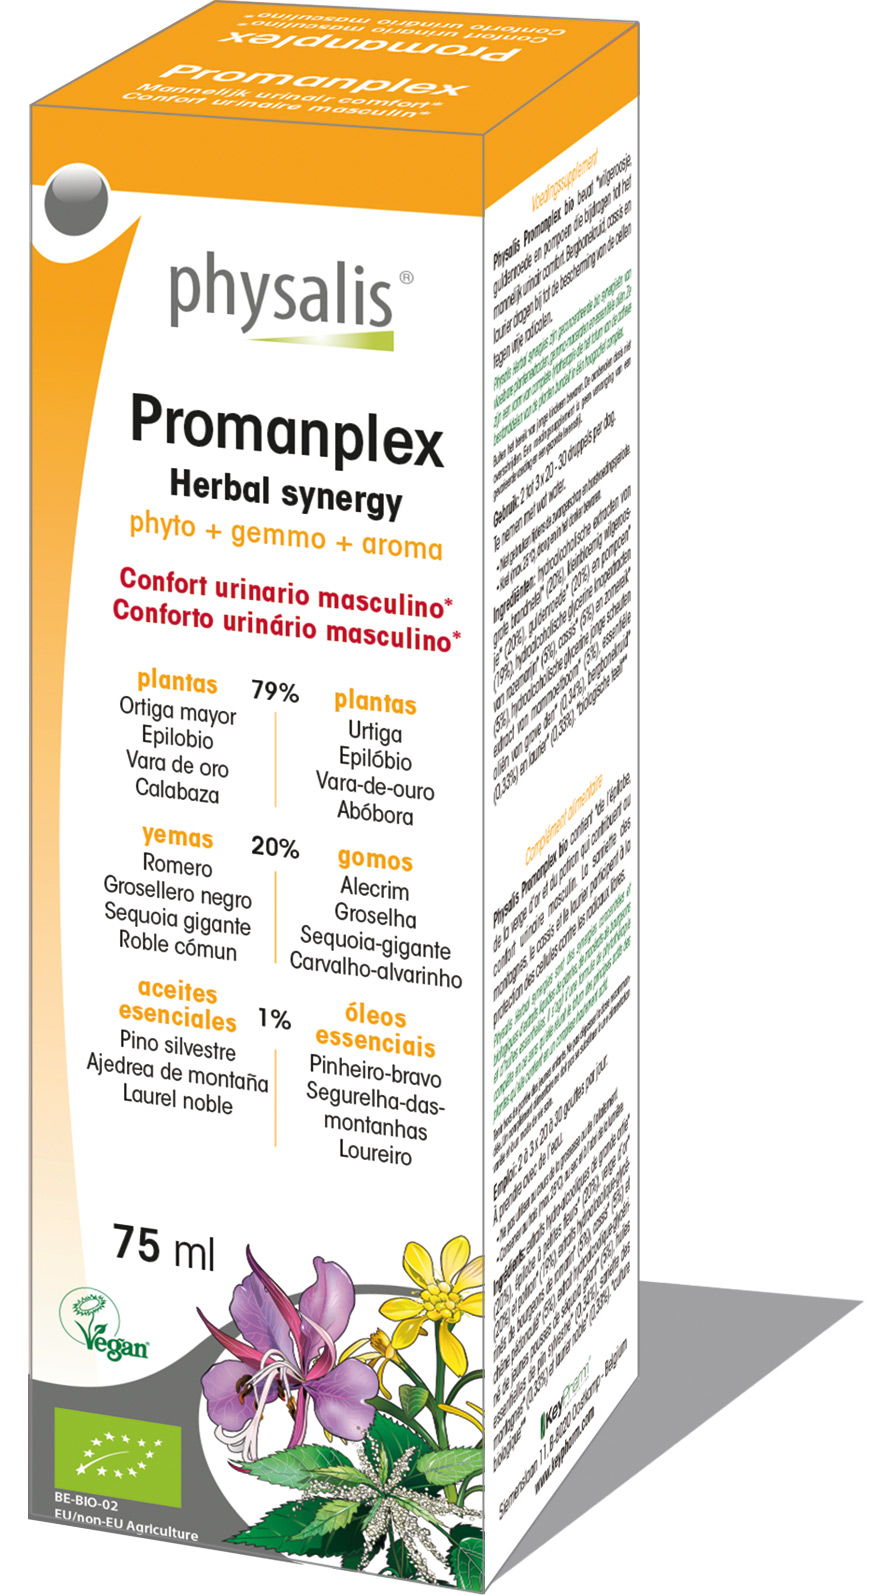 Promanplex - Herbal synergy